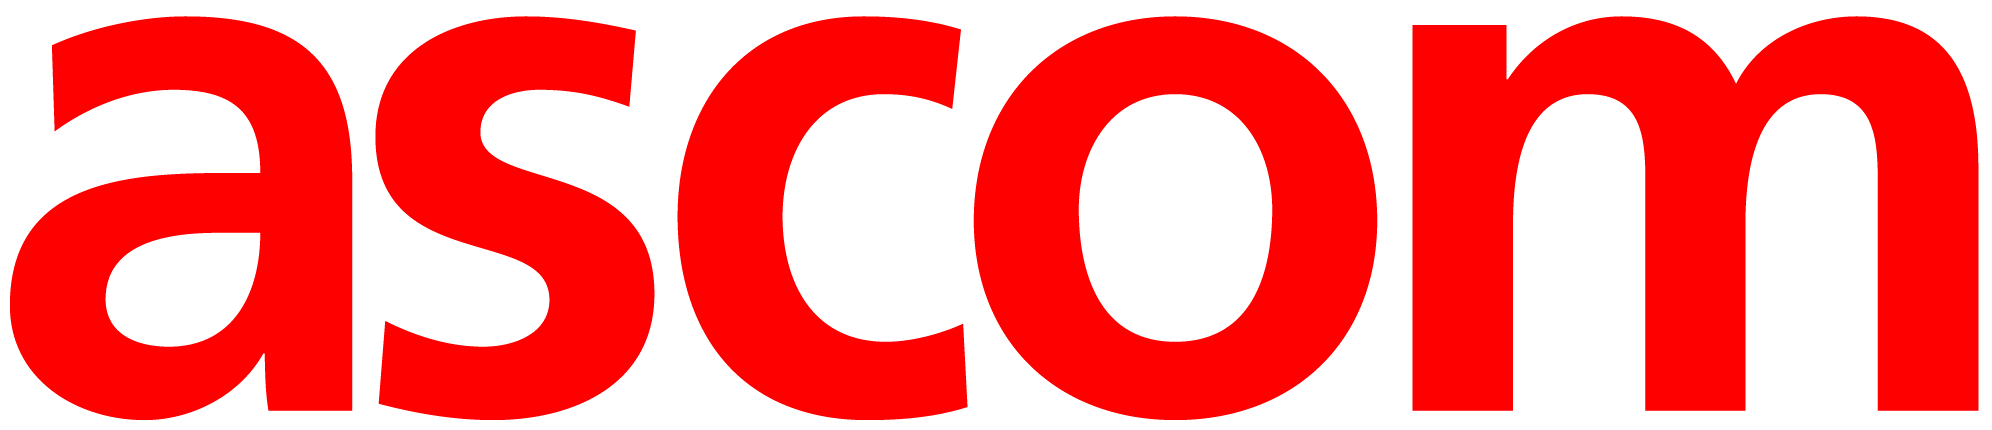 Ascom customer logo